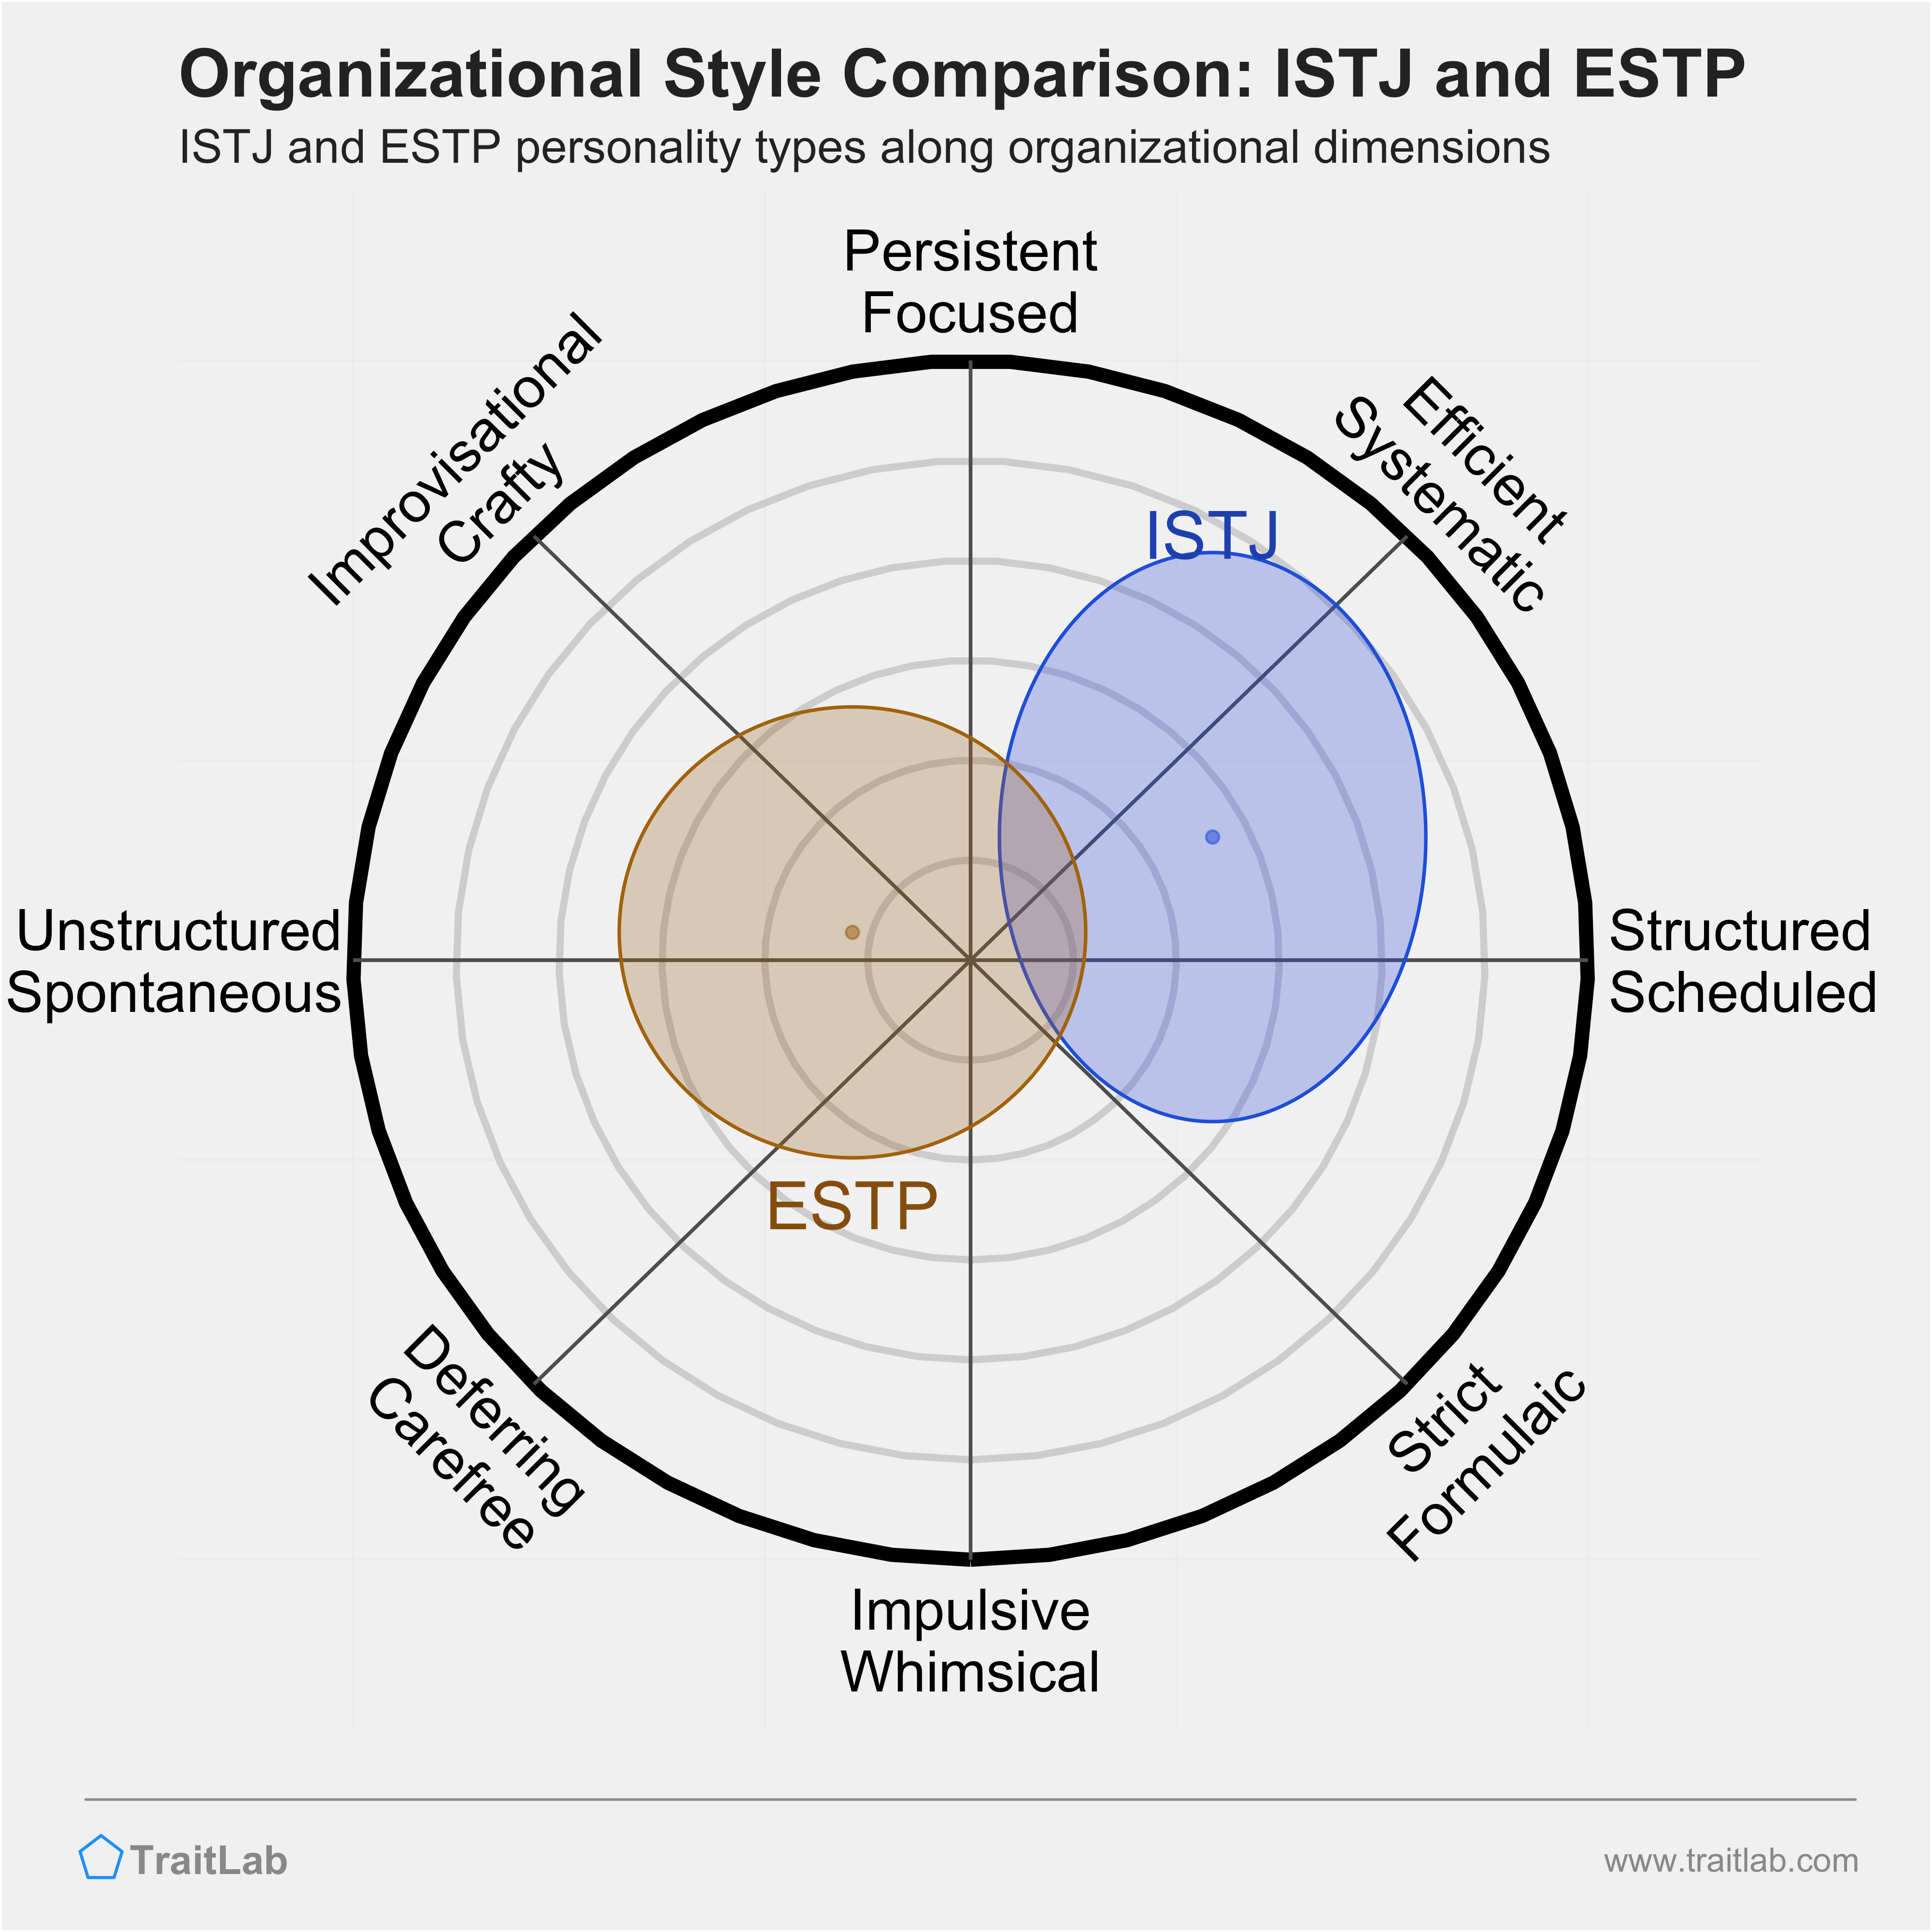 ISTJ and ESTP comparison across organizational dimensions